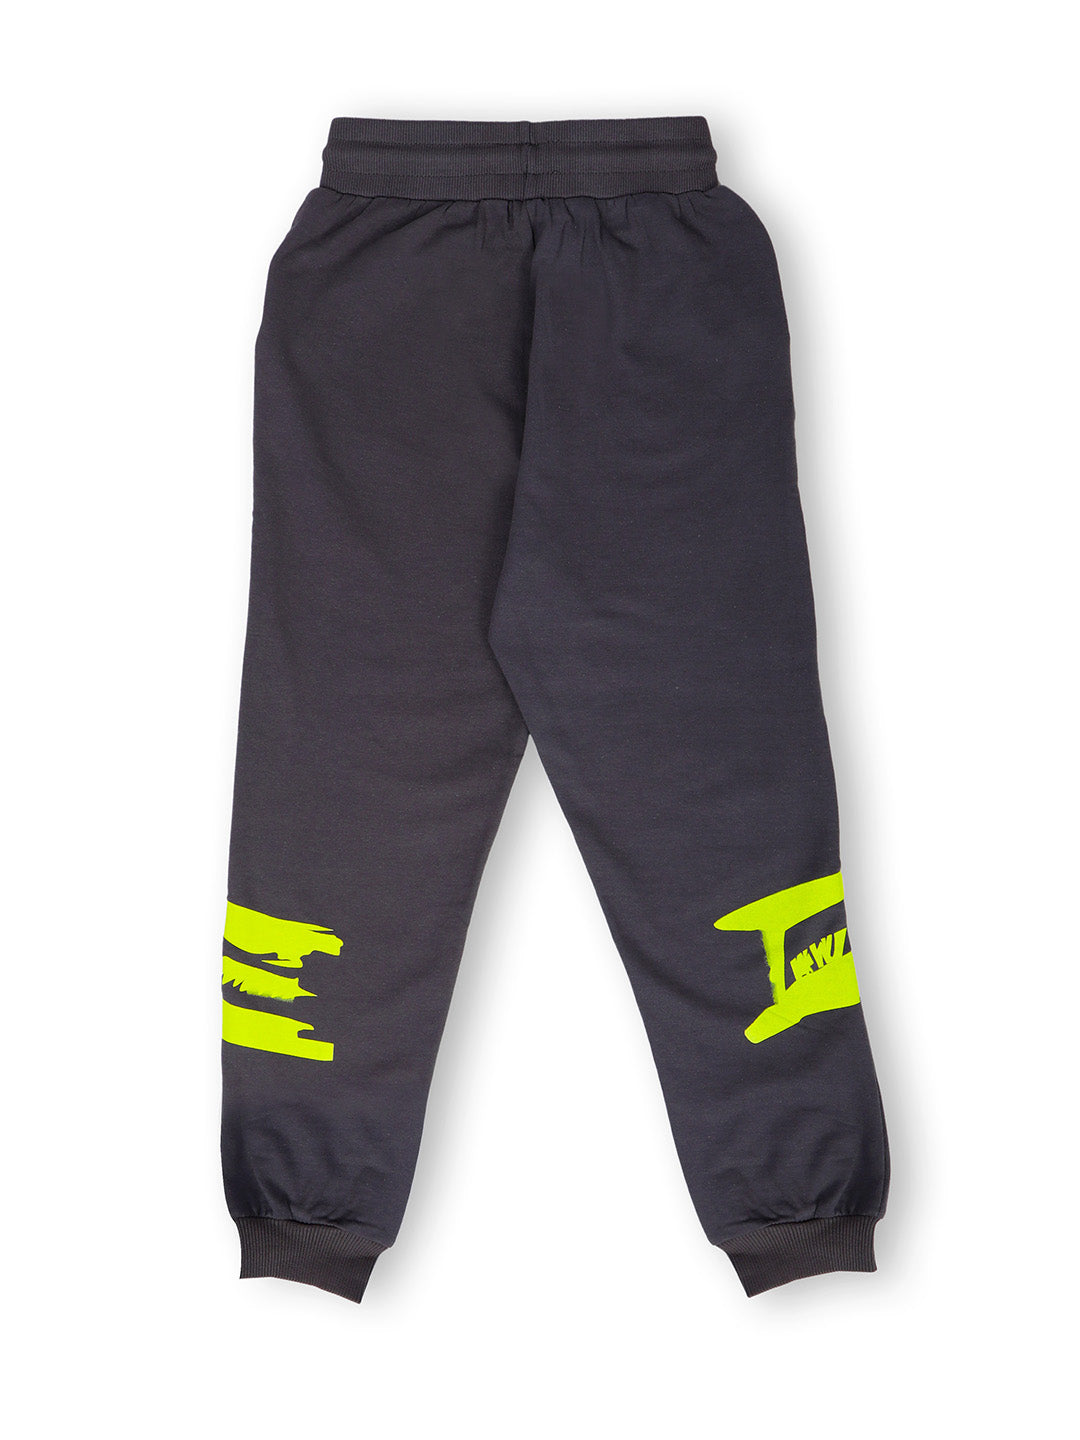 TWGE - Kids Joggers for Boys - Track Pants - Solid Cotton Regular Fit Tracks - color Grey